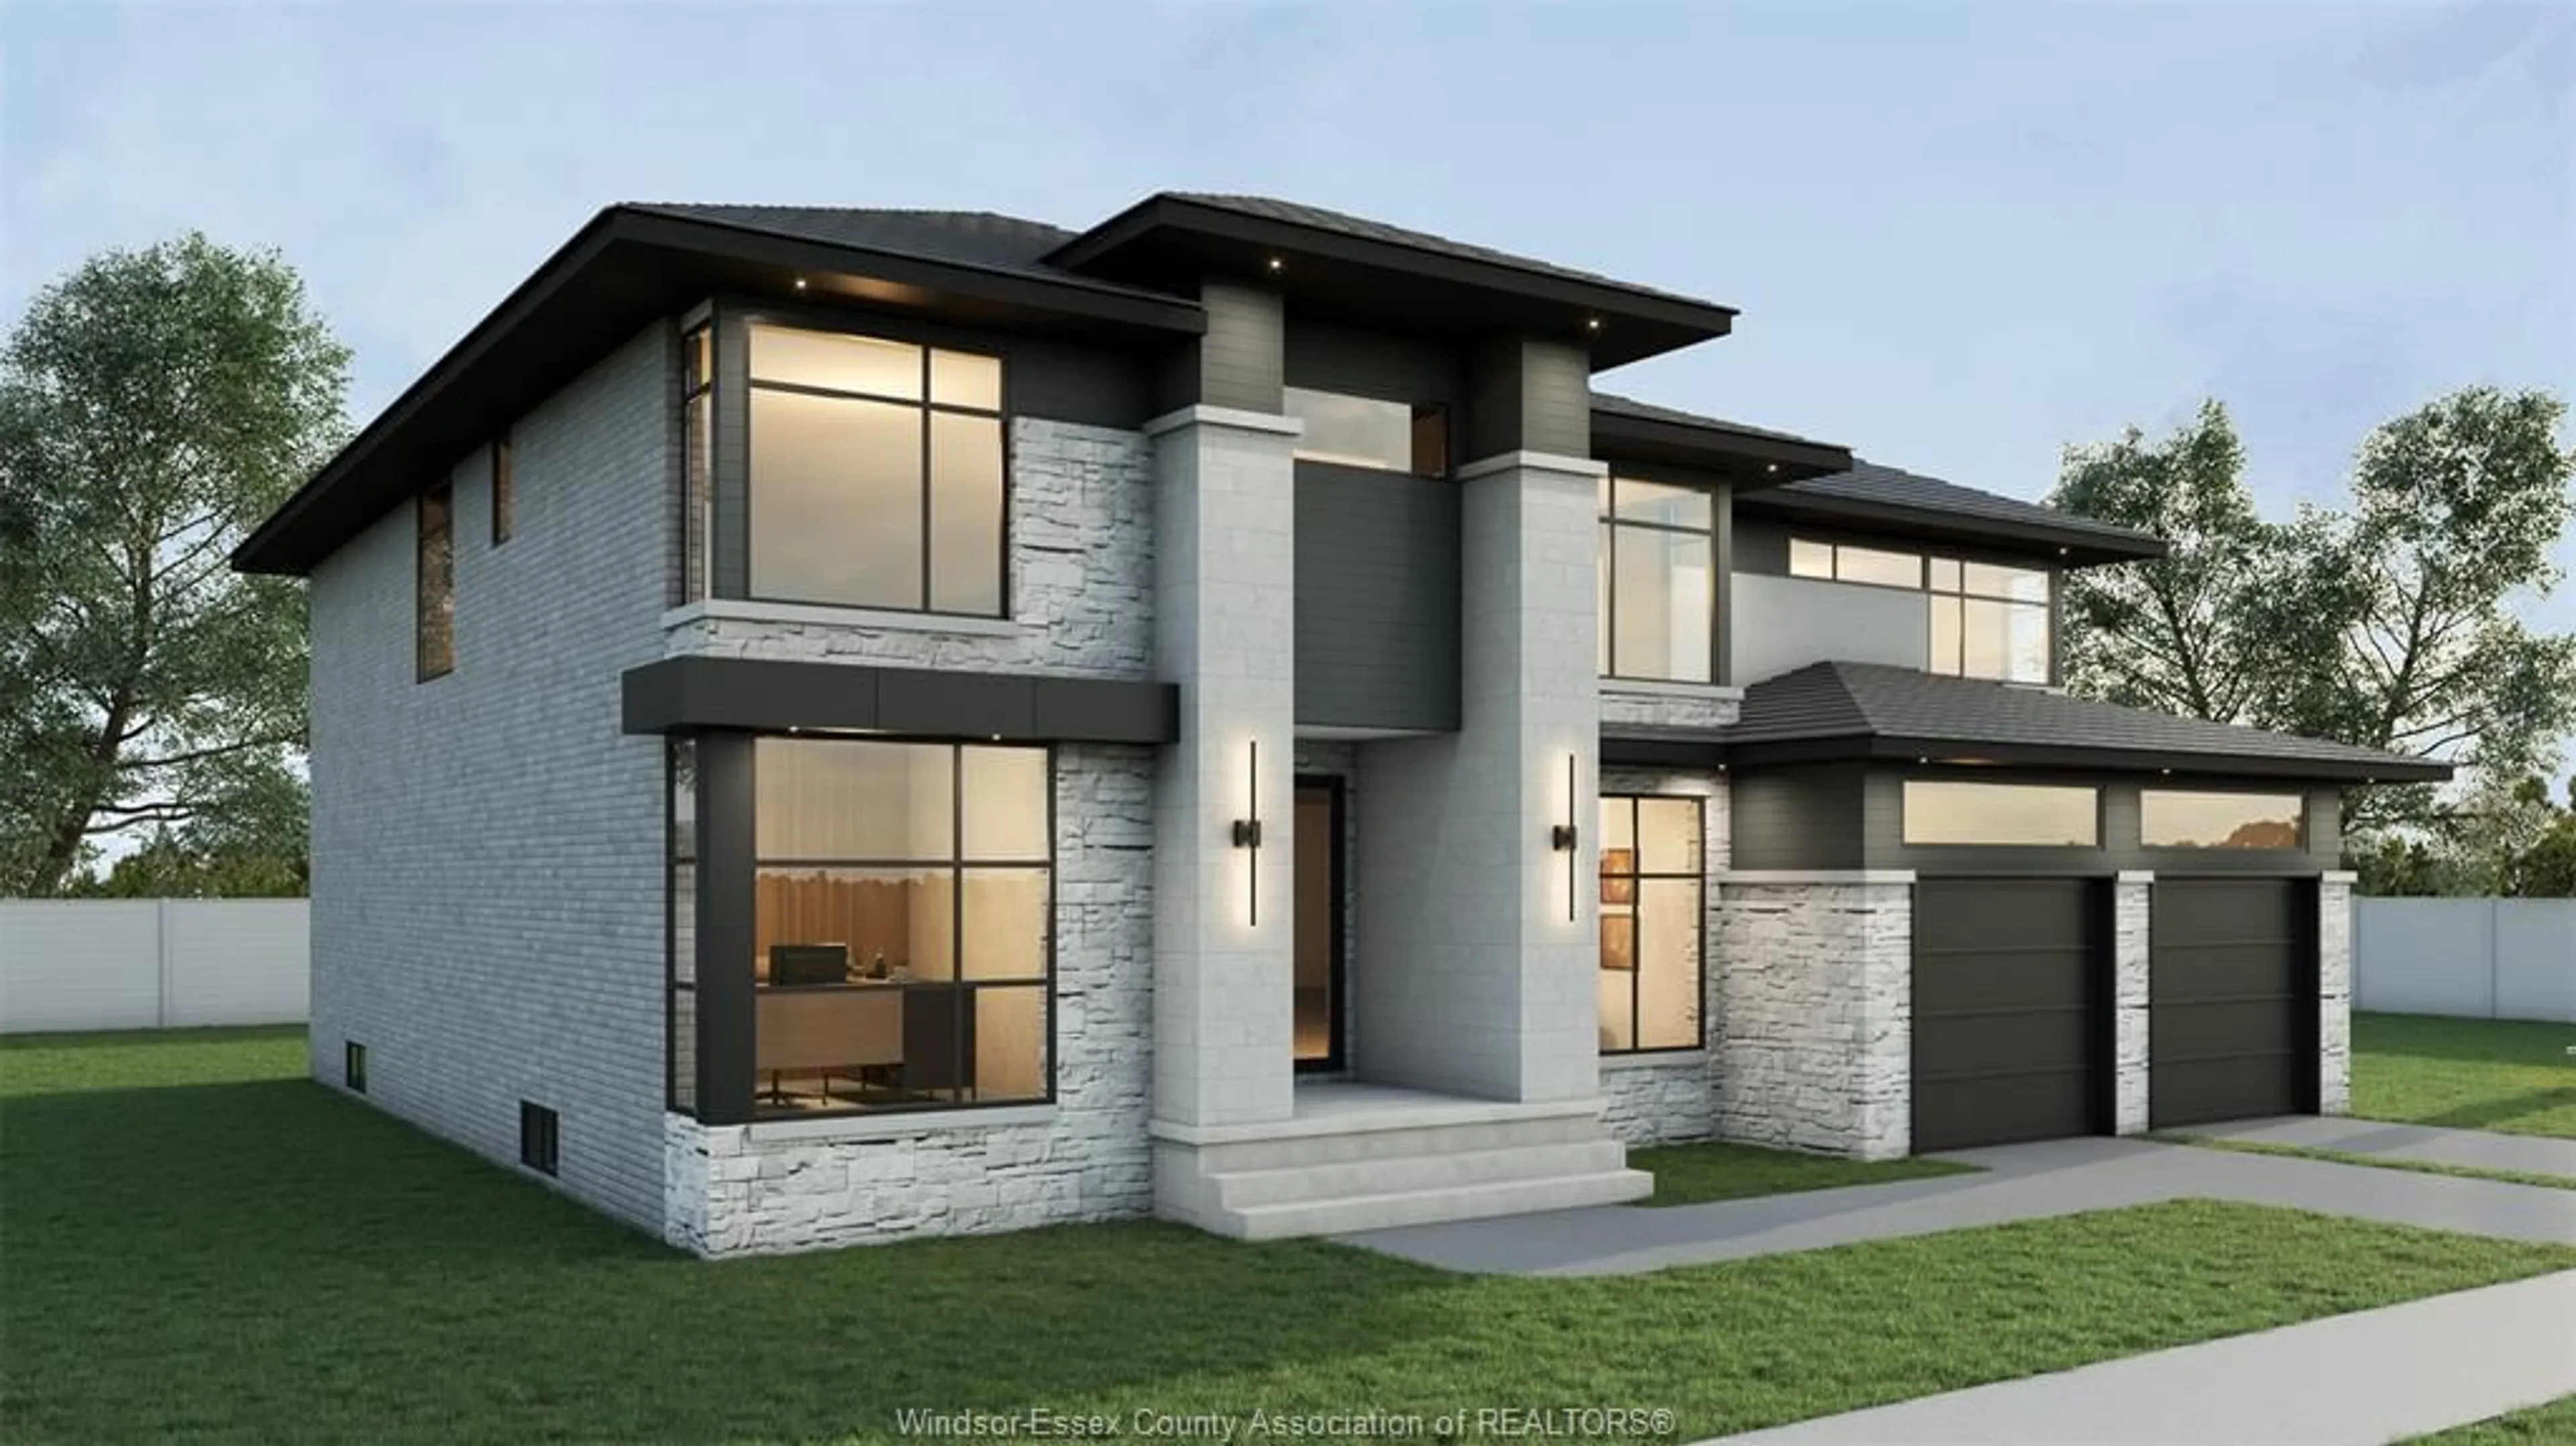 Home with brick exterior material for 4910 Terra Bella, LaSalle Ontario N9H 0N1